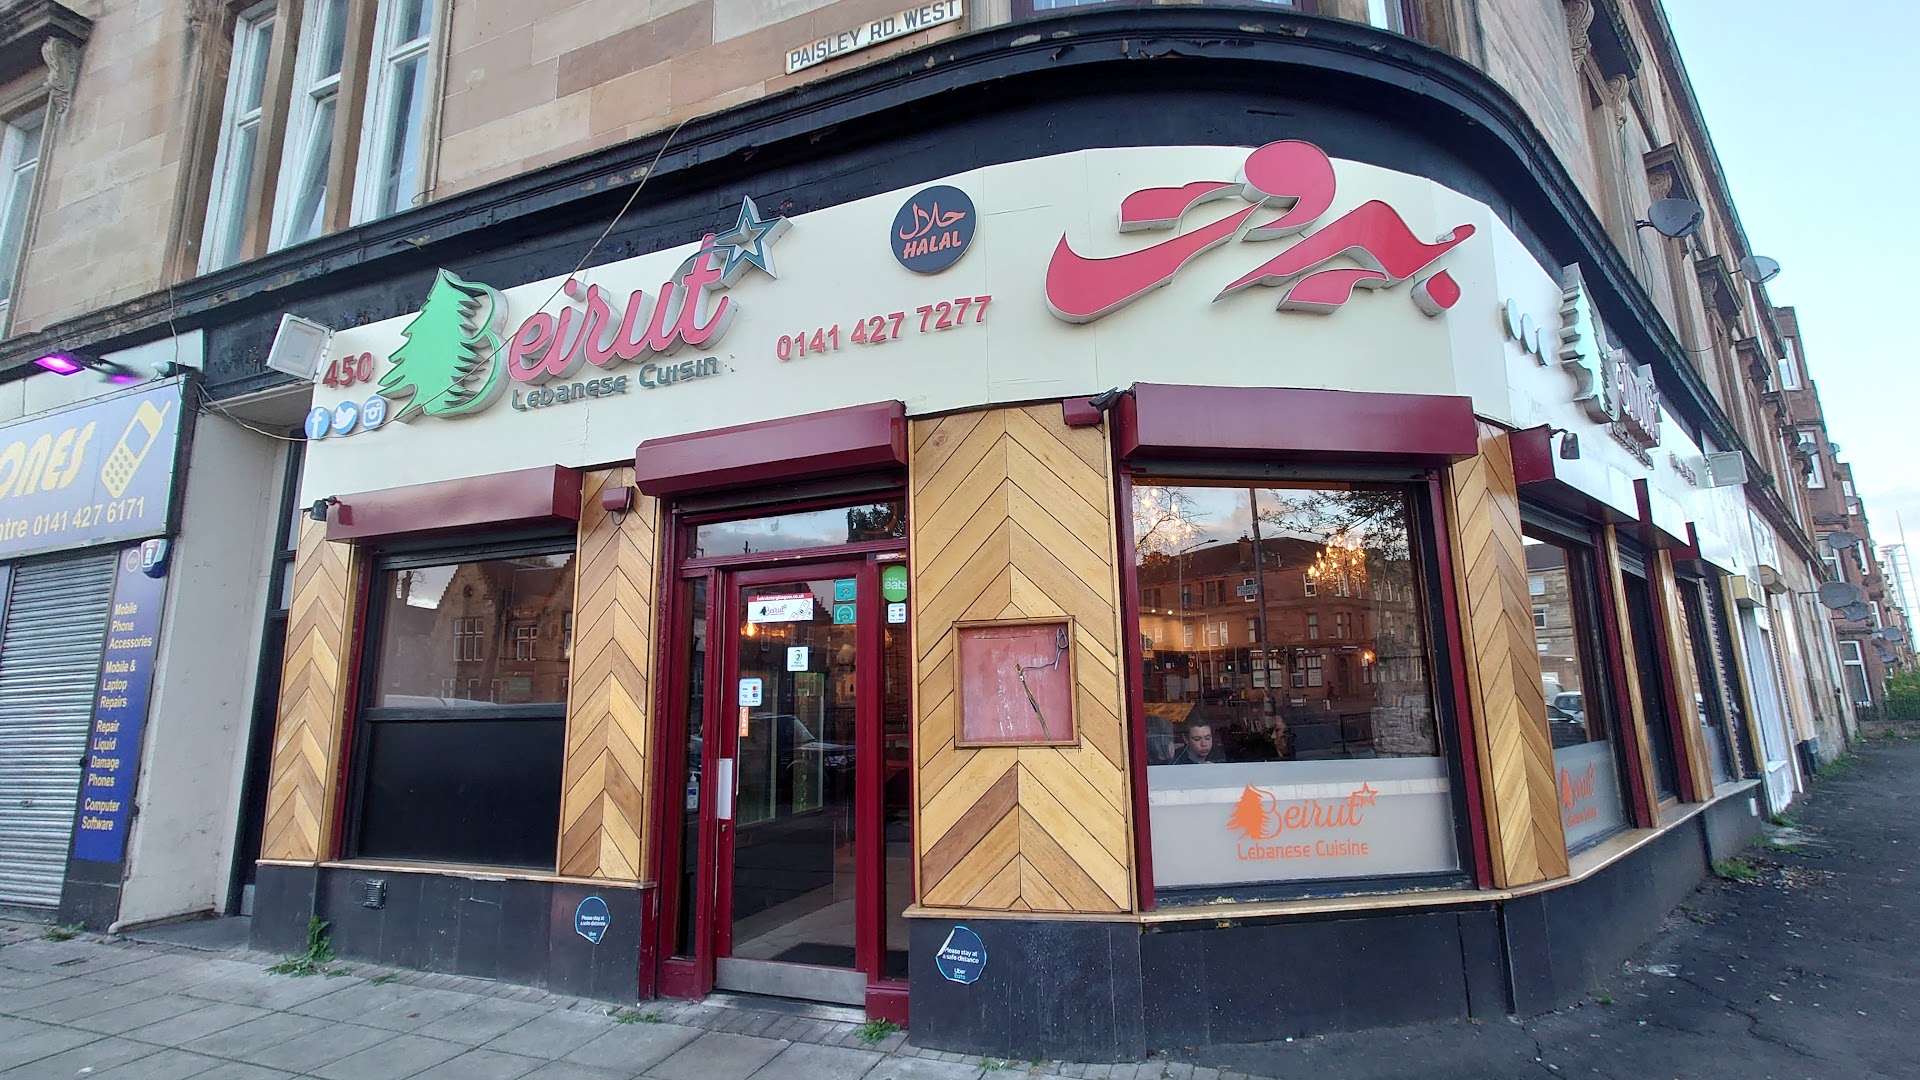 Beirut Star: A Lebanese Restaurant in Glasgow